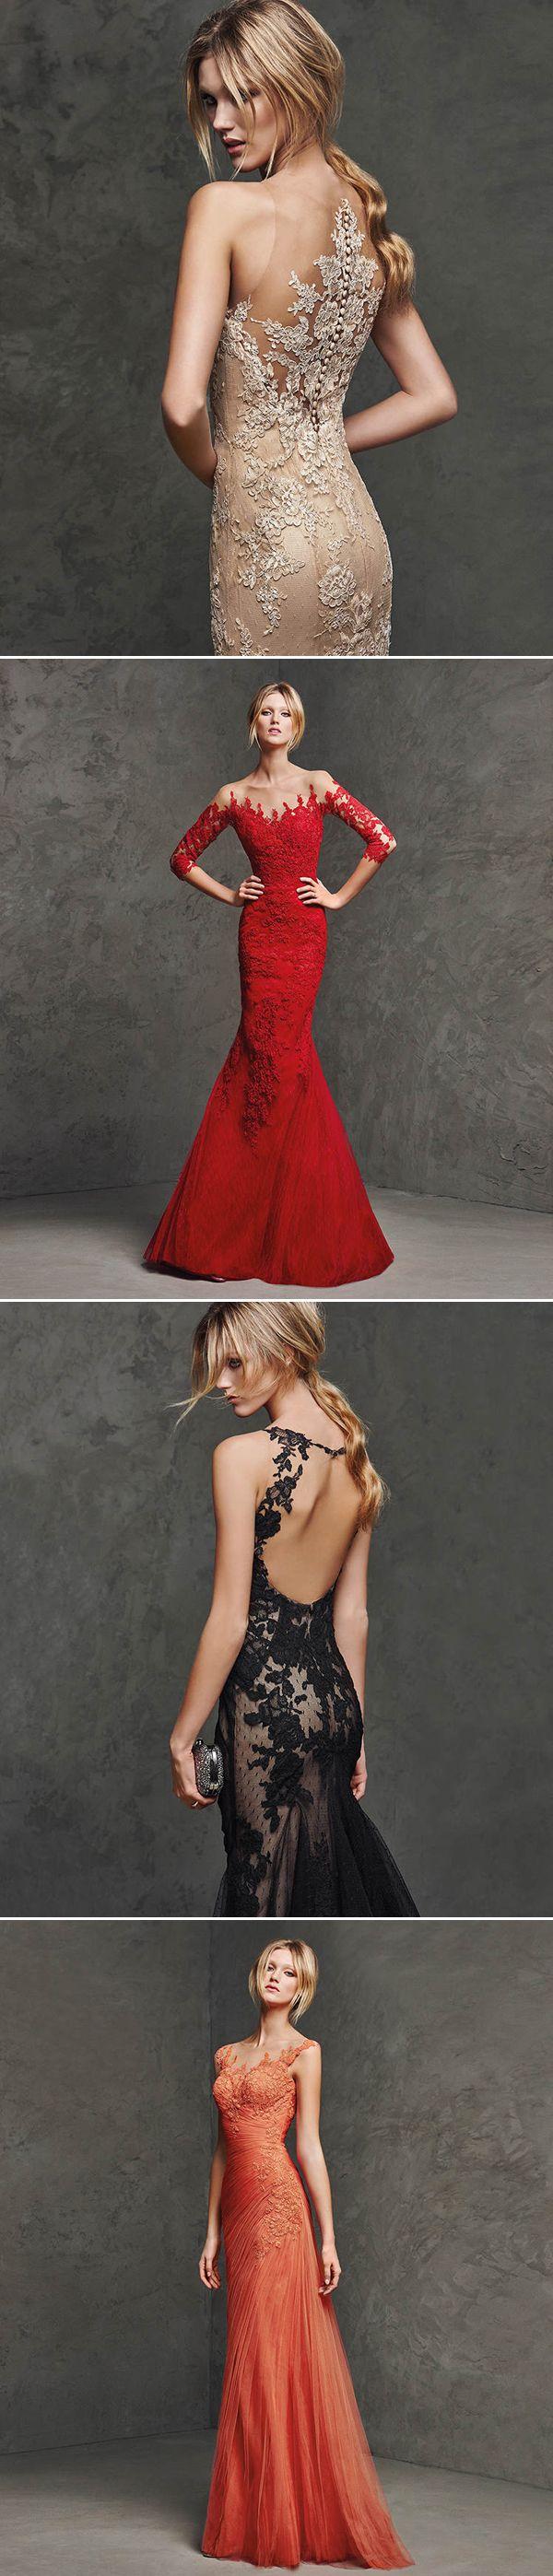 Mariage - Dress To Impress! 32 Stunning Fashion-forward Reception Gowns